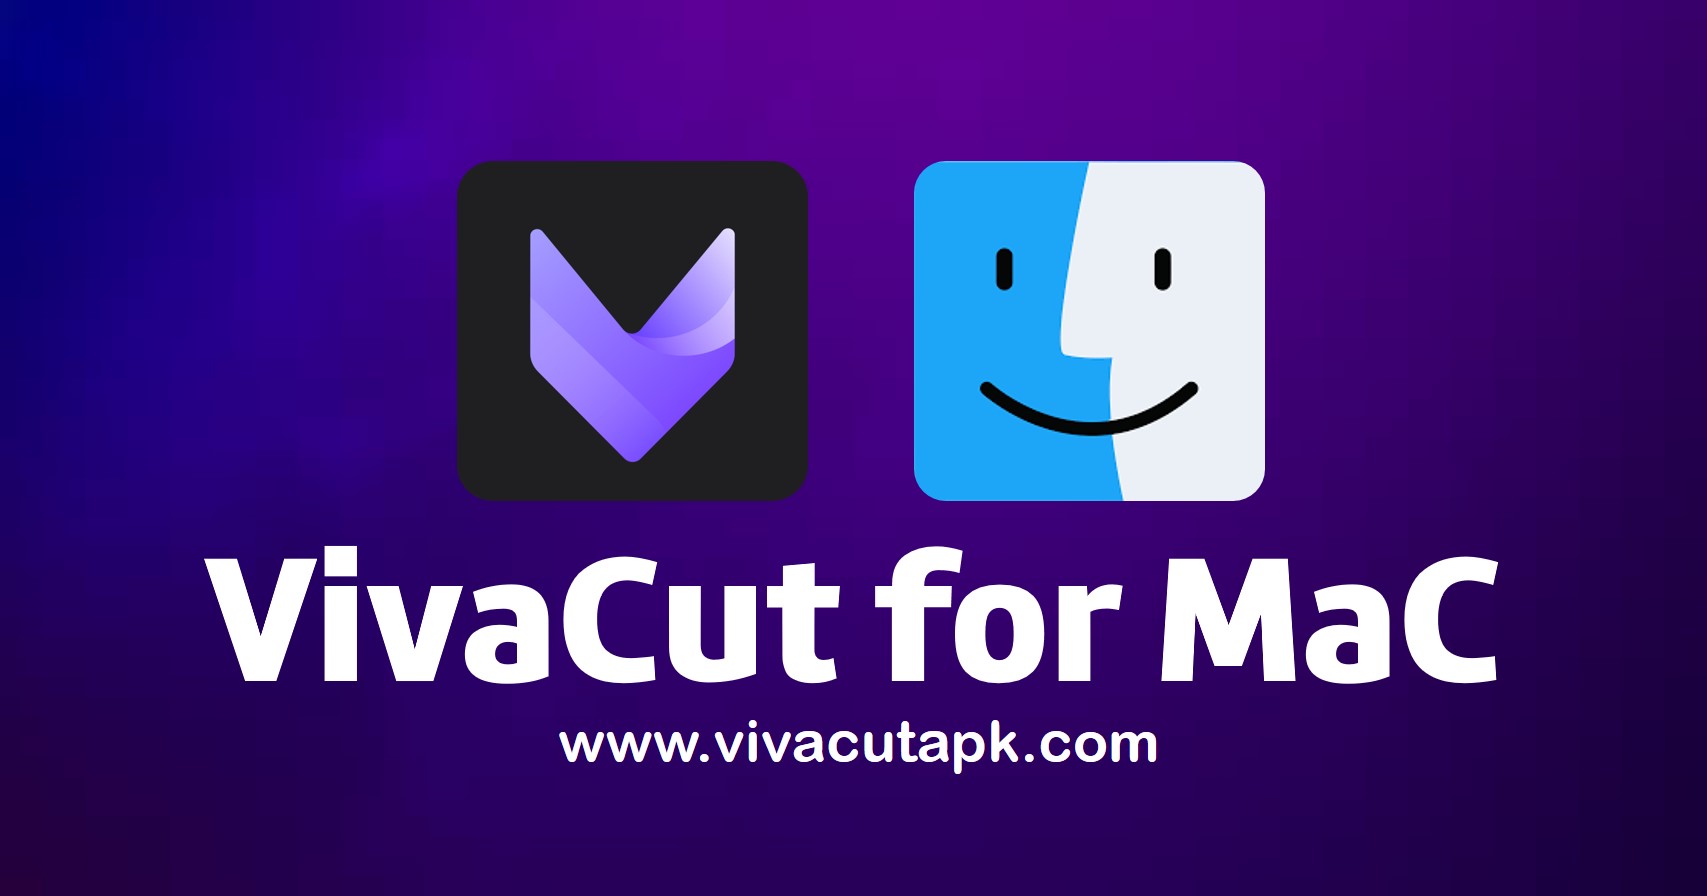 vivacut for mac